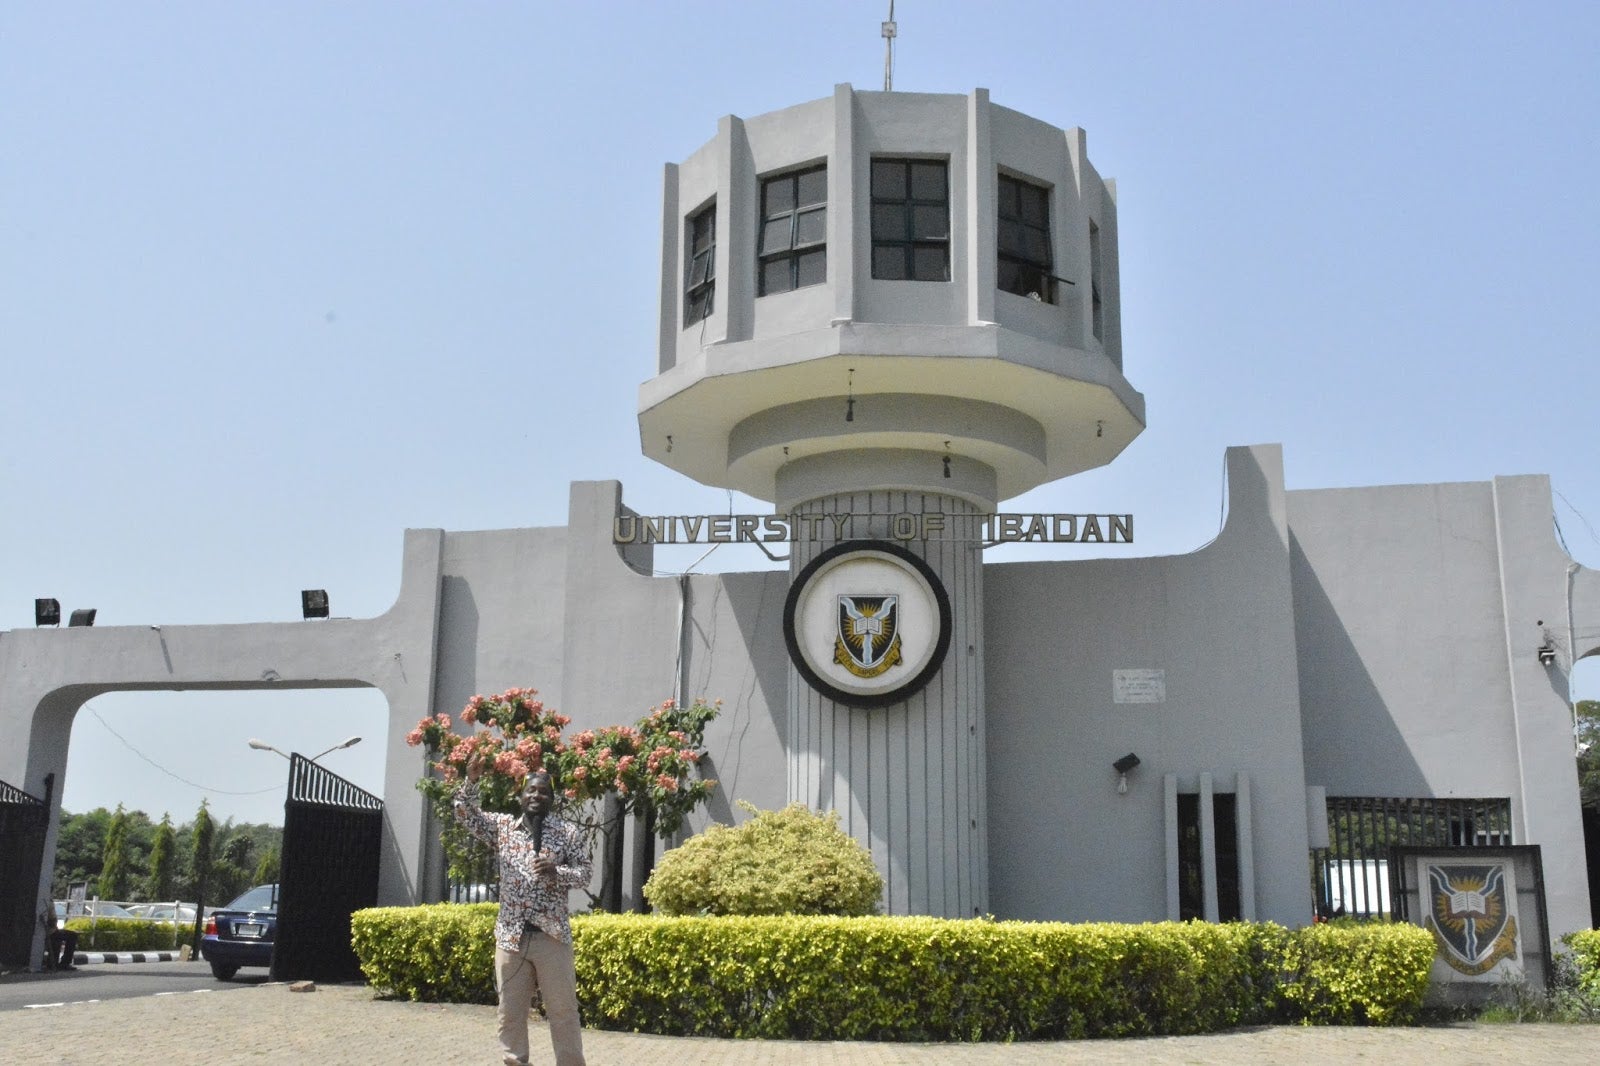 everything about University of Ibadan